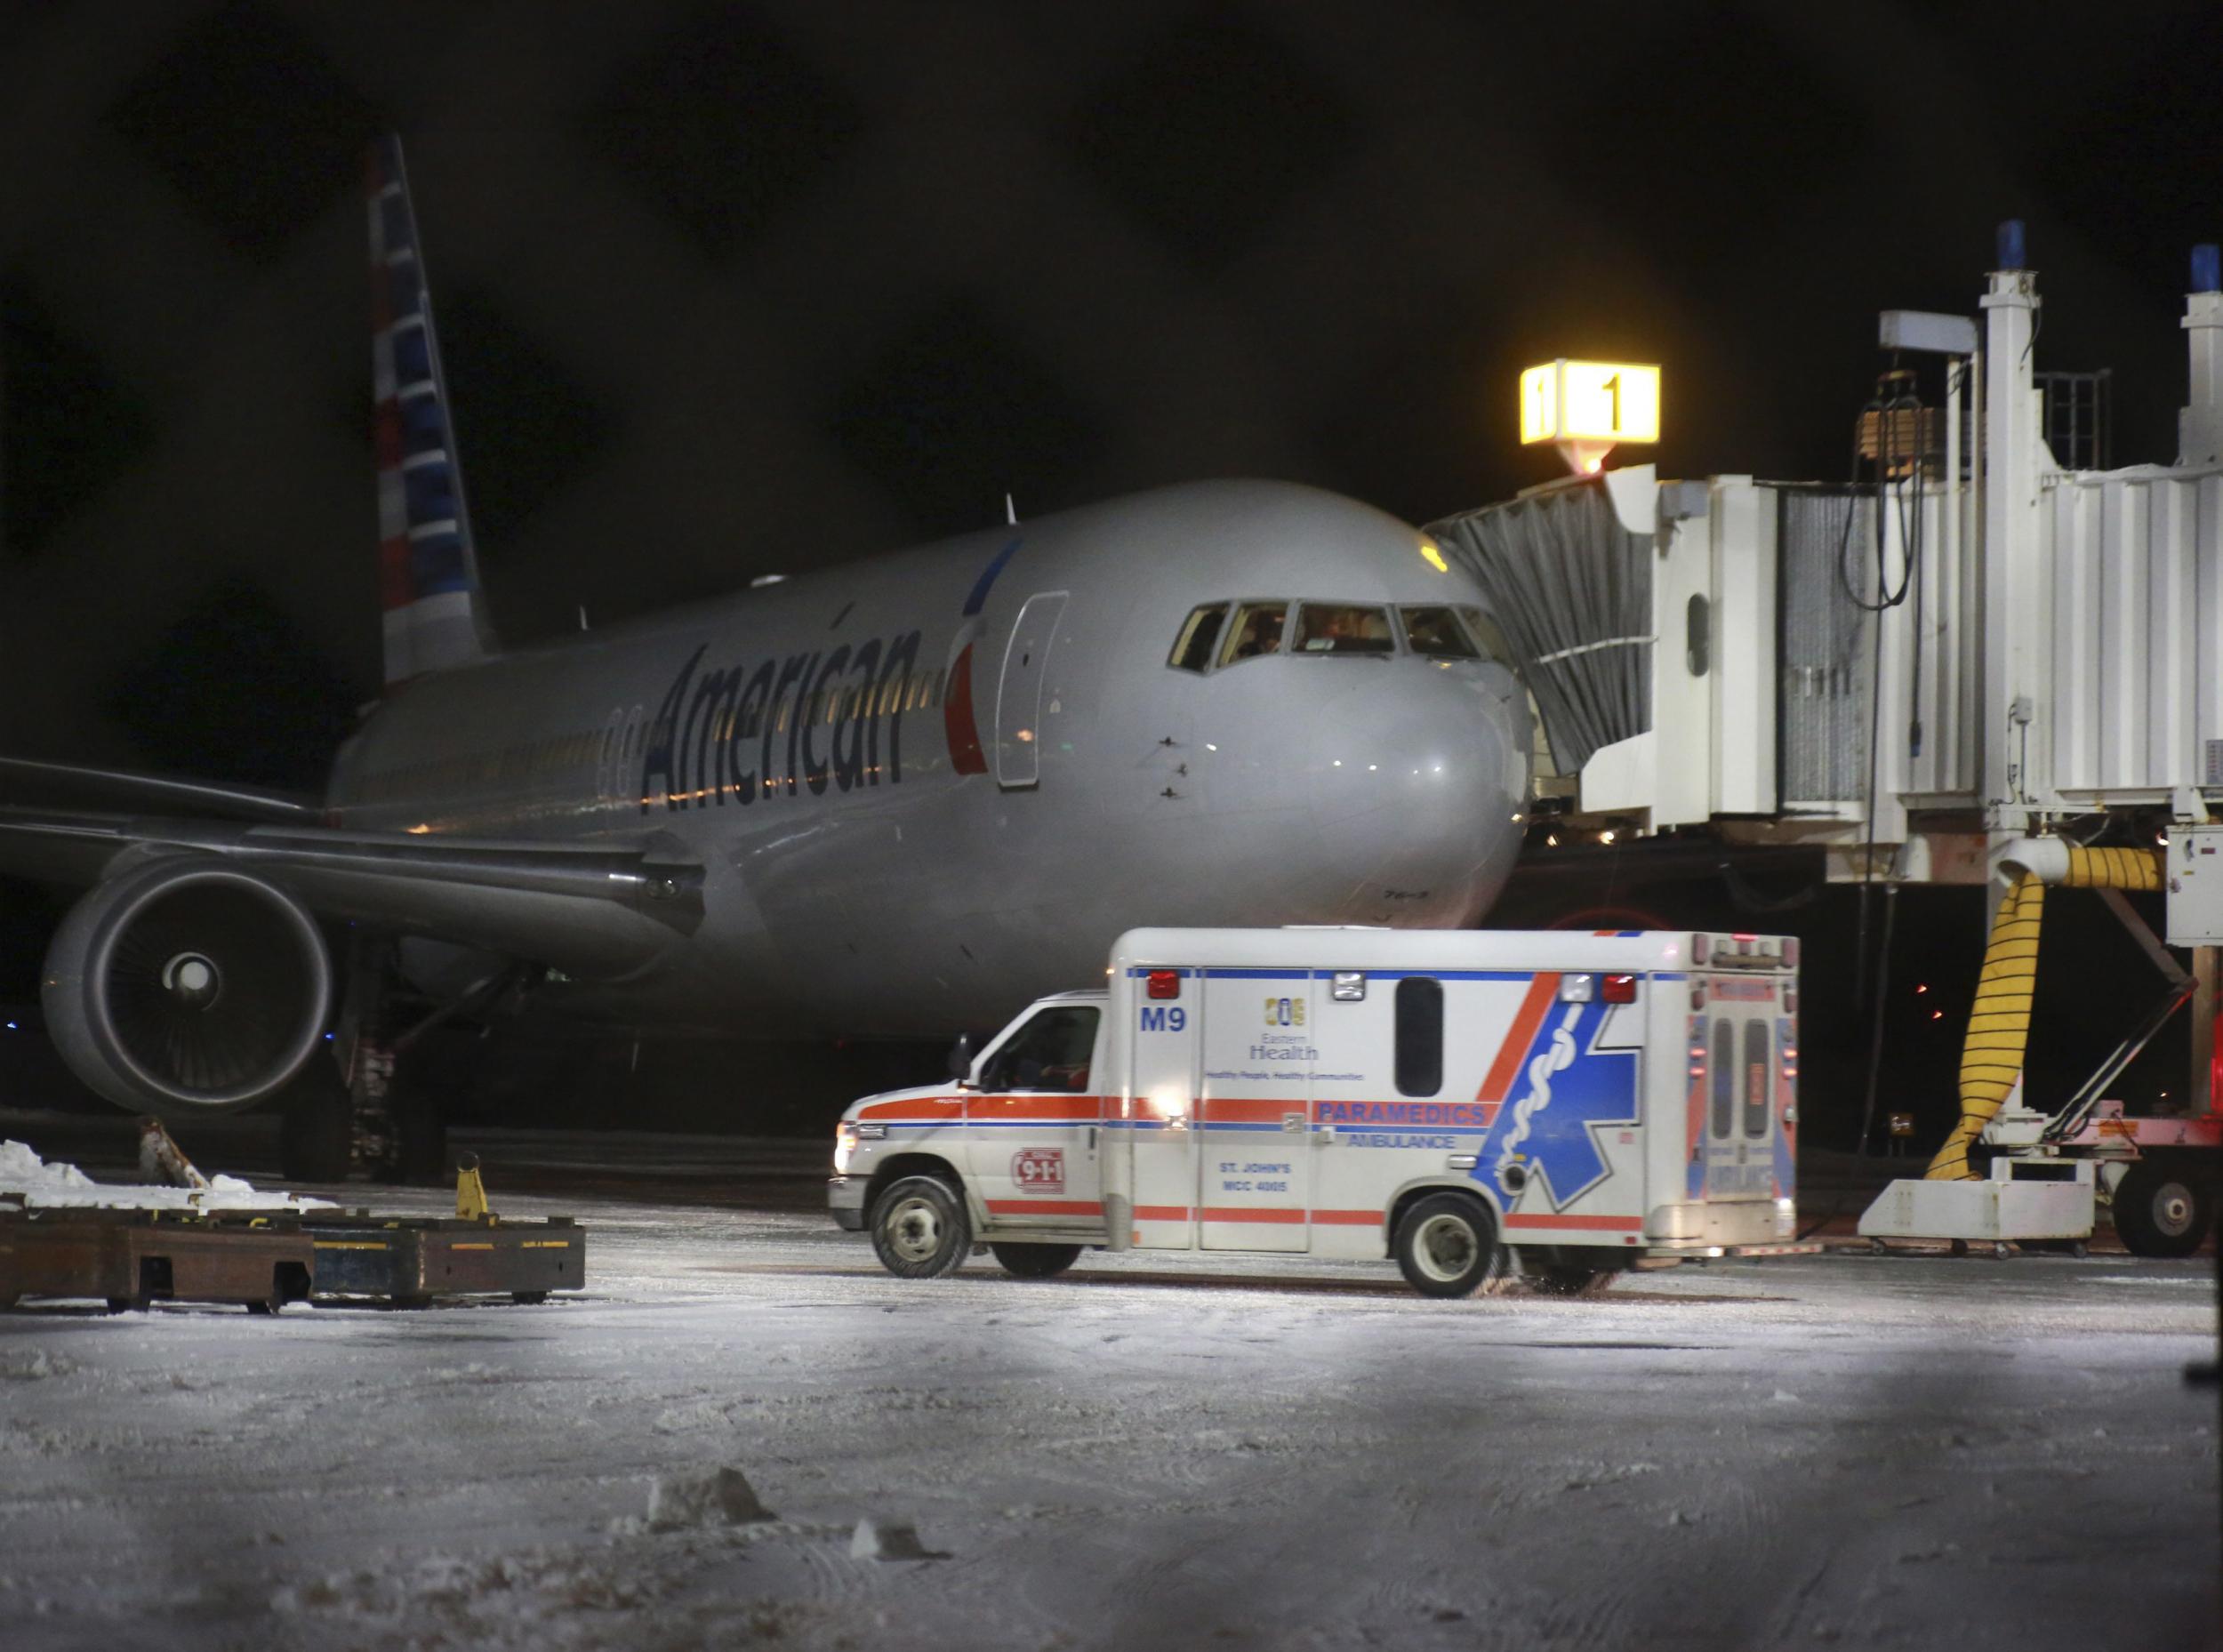 An ambulance next to the plane at St John's International Airport, Newfoundland